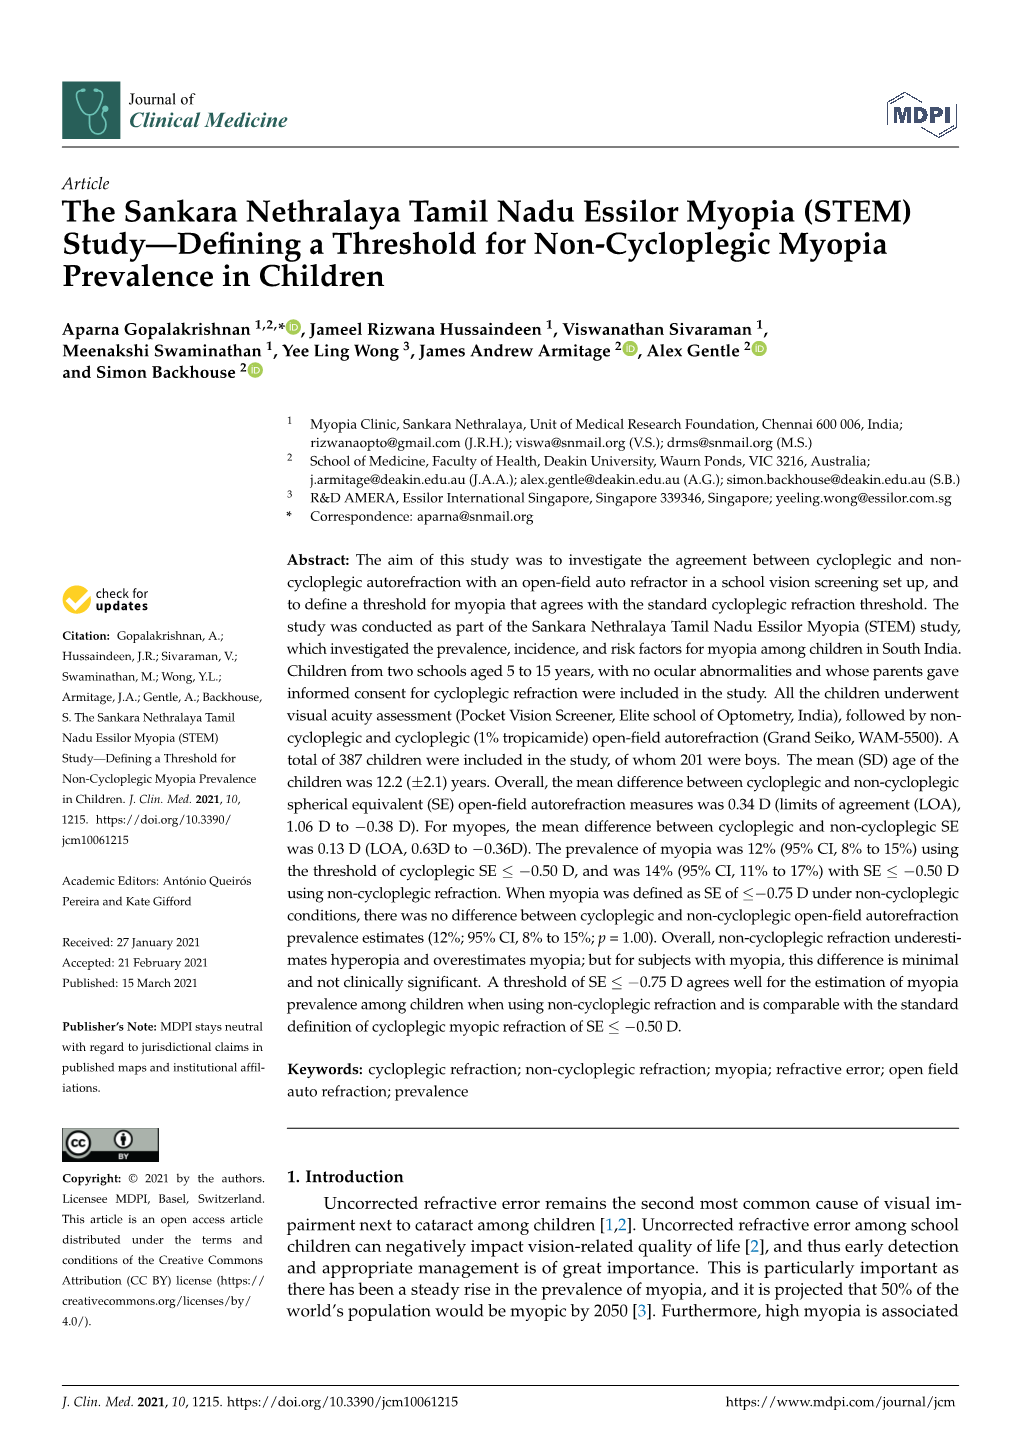 The Sankara Nethralaya Tamil Nadu Essilor Myopia (STEM) Study—Deﬁning a Threshold for Non-Cycloplegic Myopia Prevalence in Children